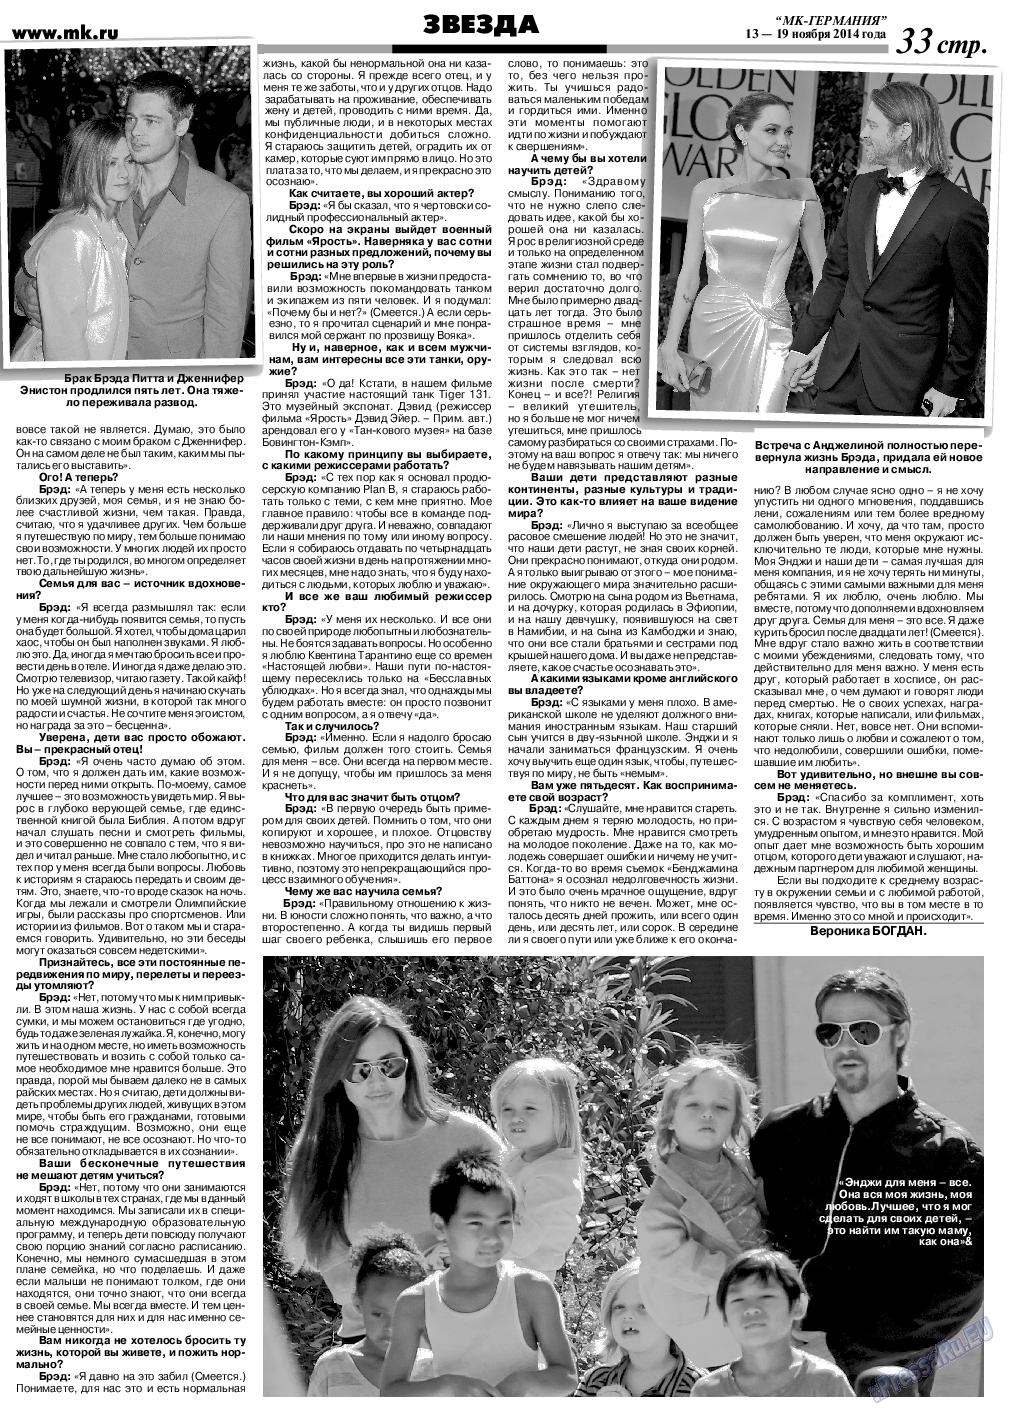 МК-Германия, газета. 2014 №46 стр.33